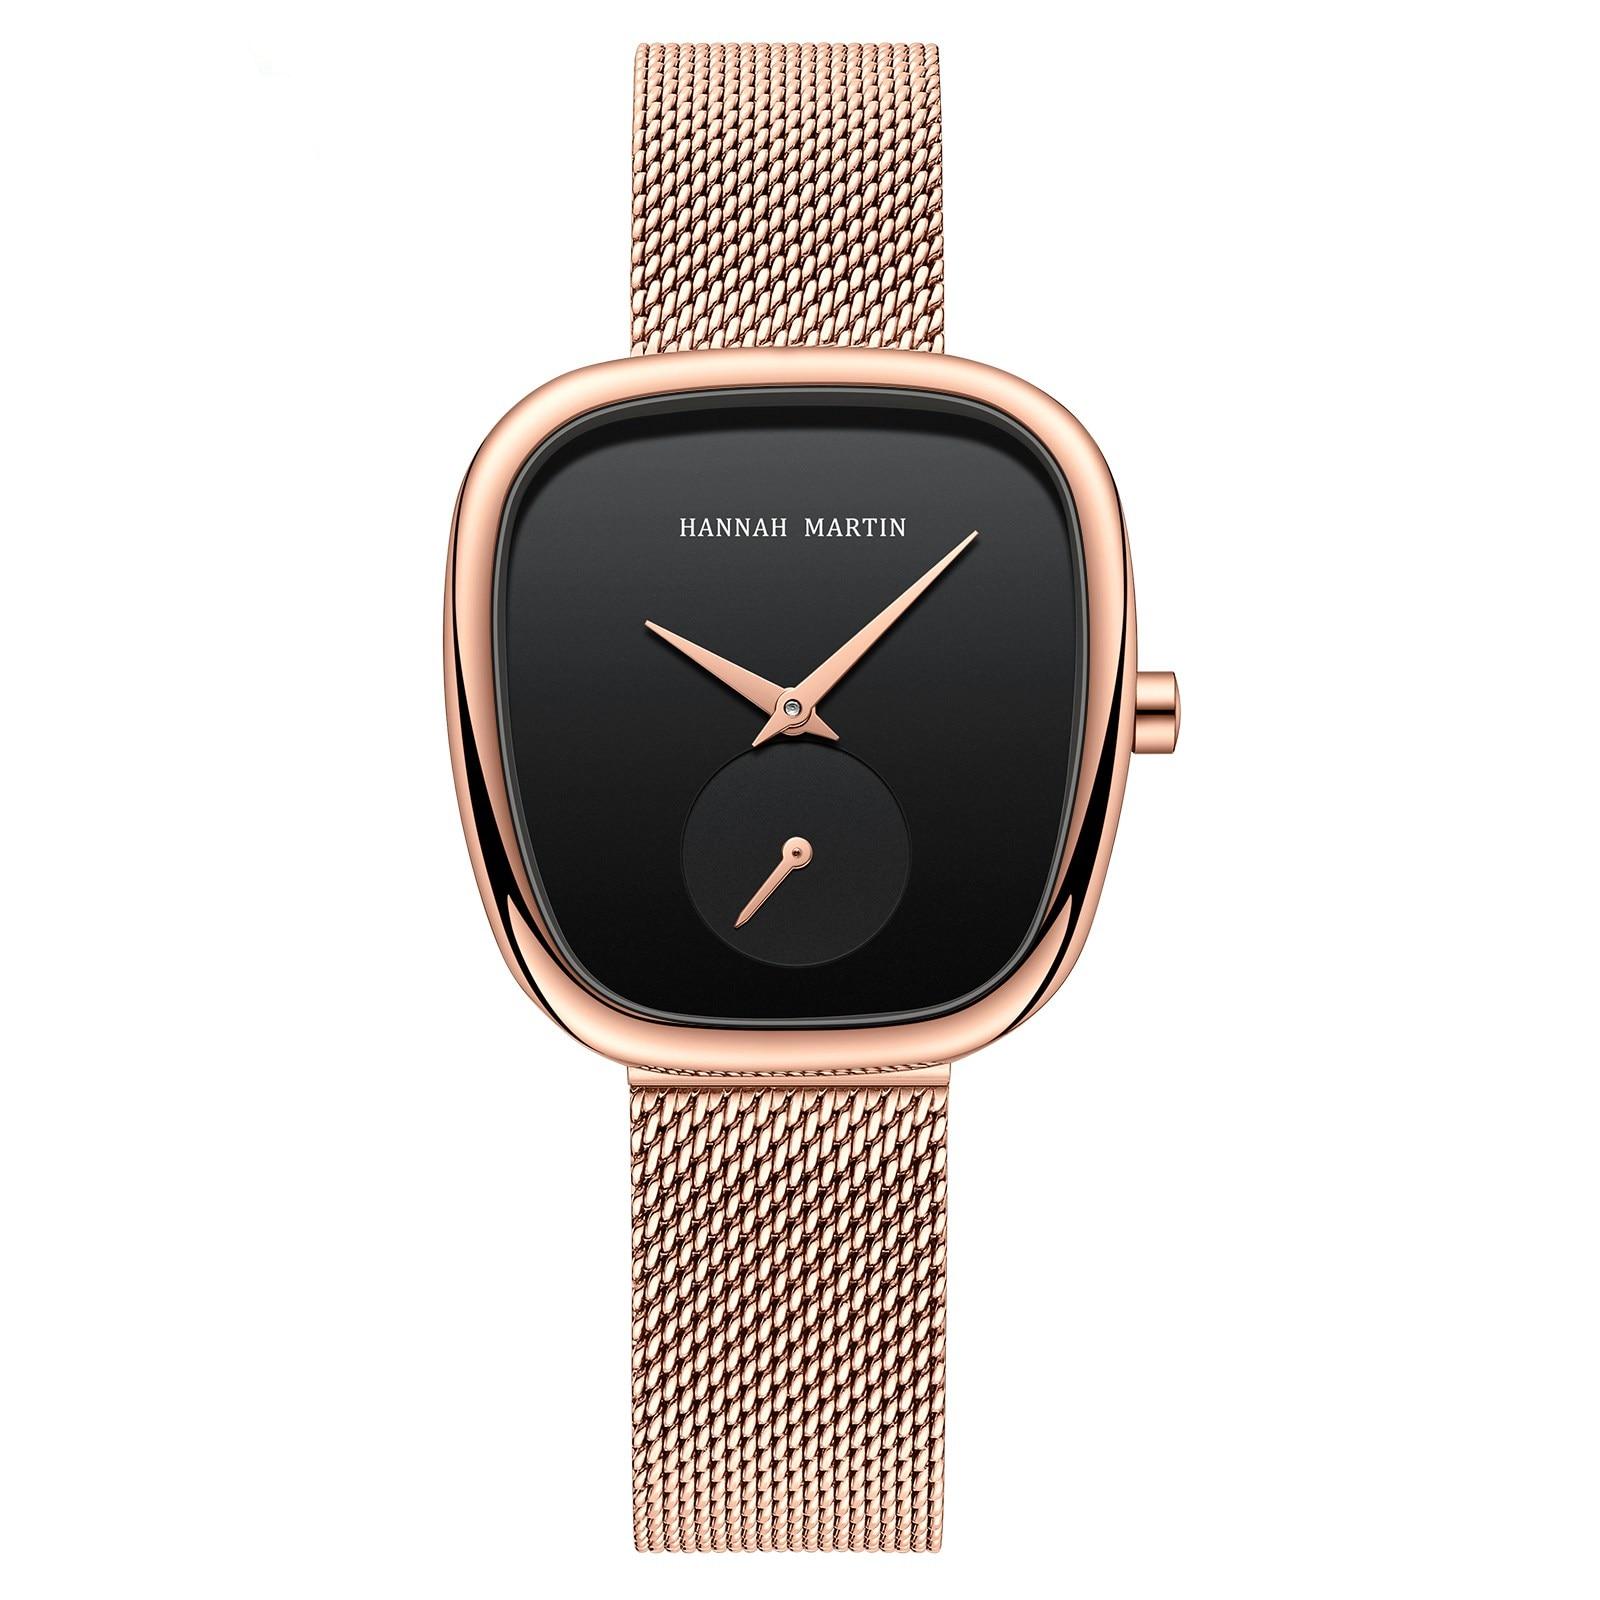 An elegant women's Elegant Bracelet Wristwatch For Women with black dial.